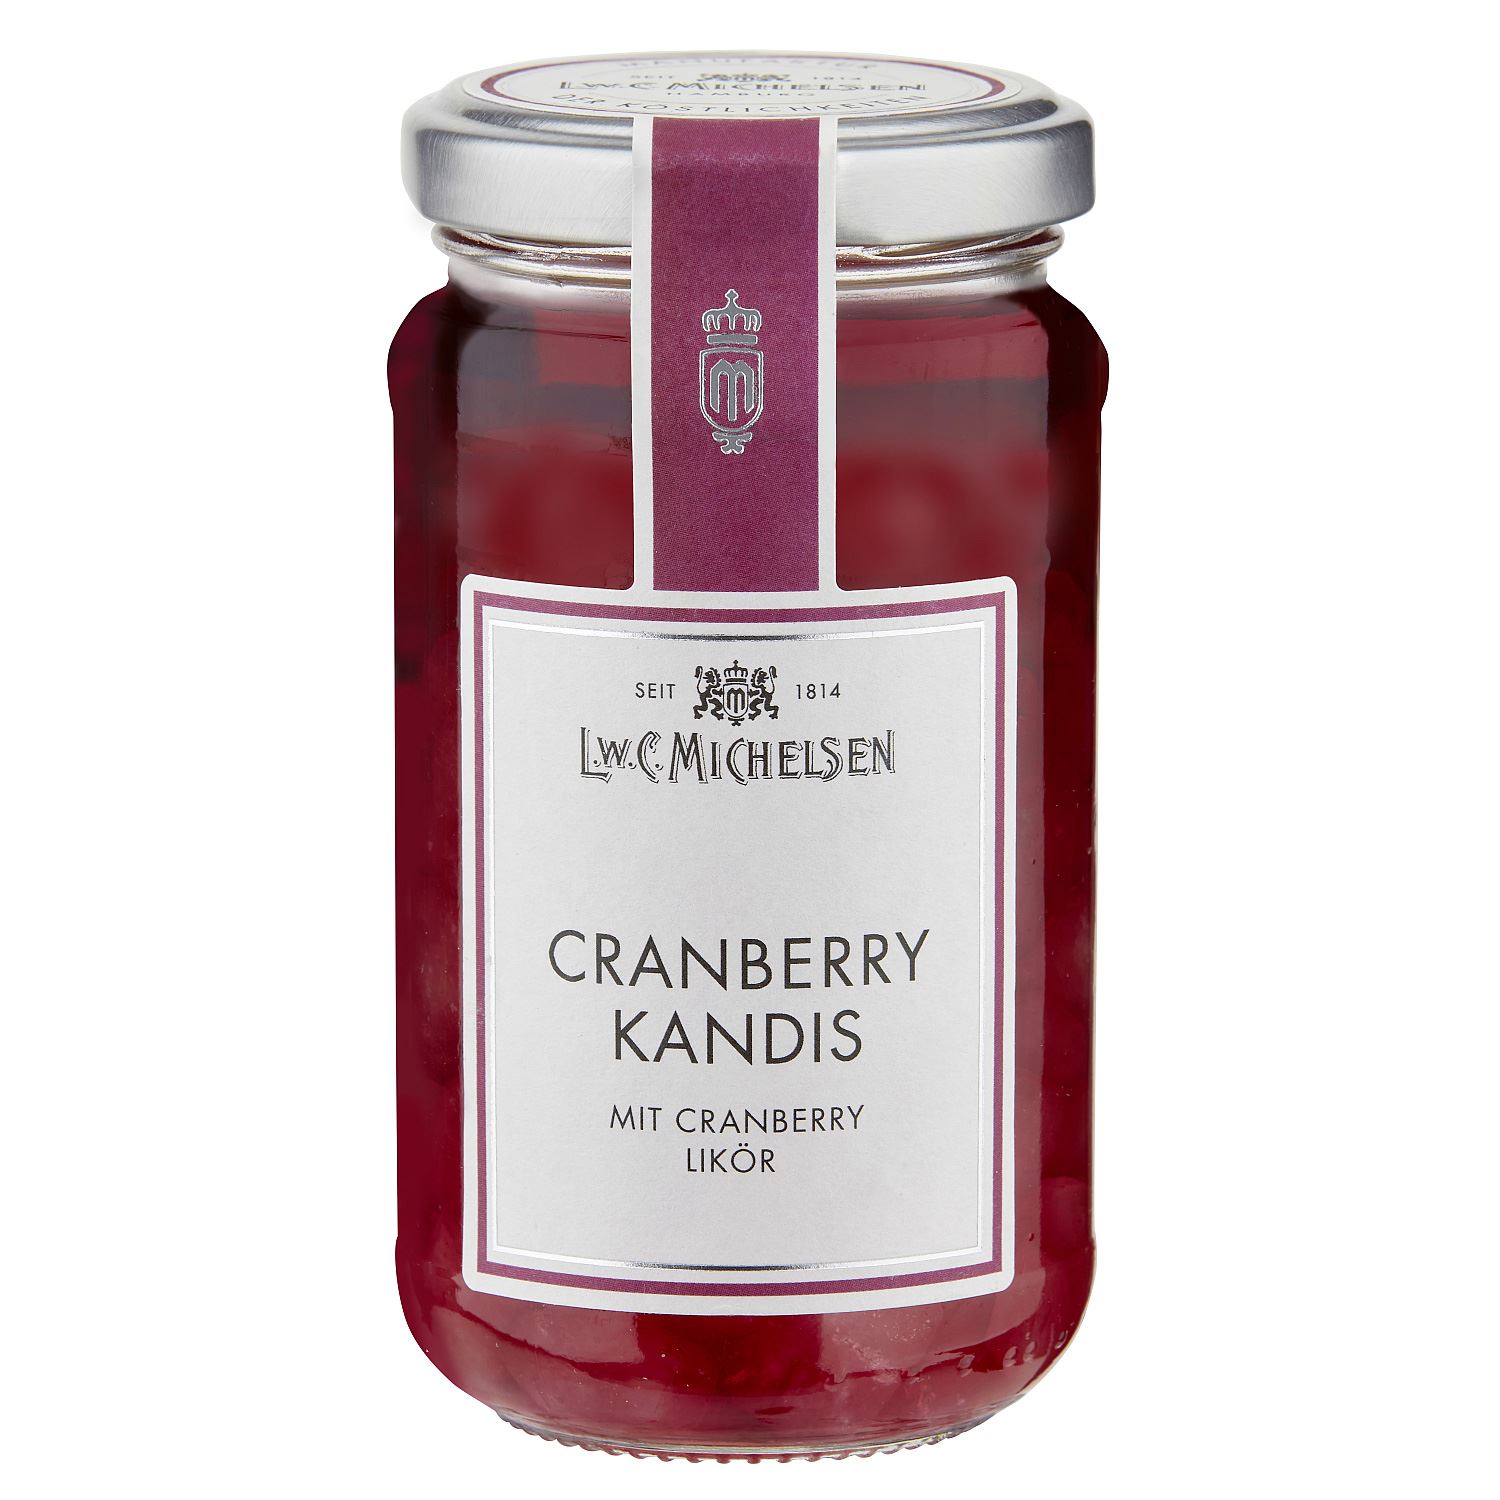 Cranberry-Kandis